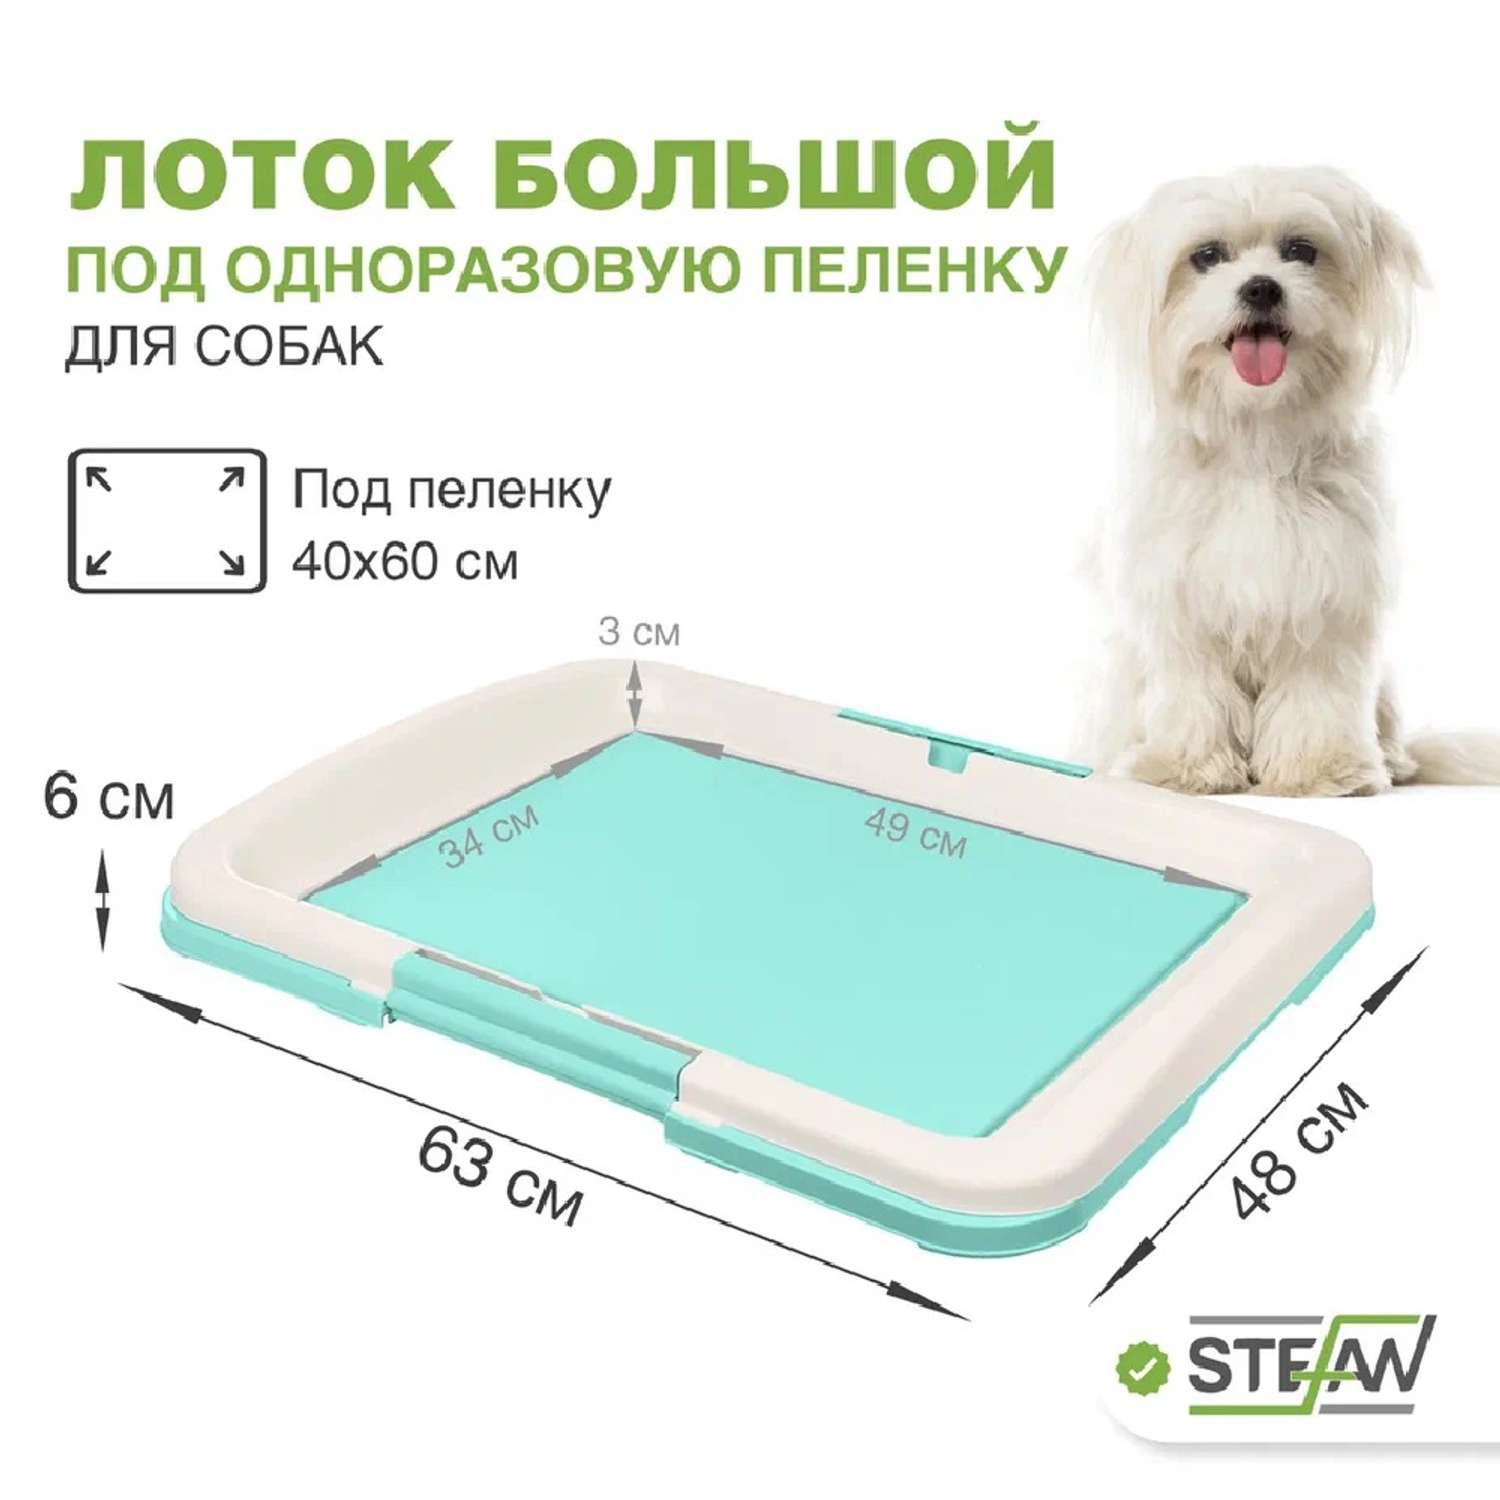 Туалет лоток для собак Stefan под одноразовую пеленку большой L 63x49х6 см бирюзовый - фото 1